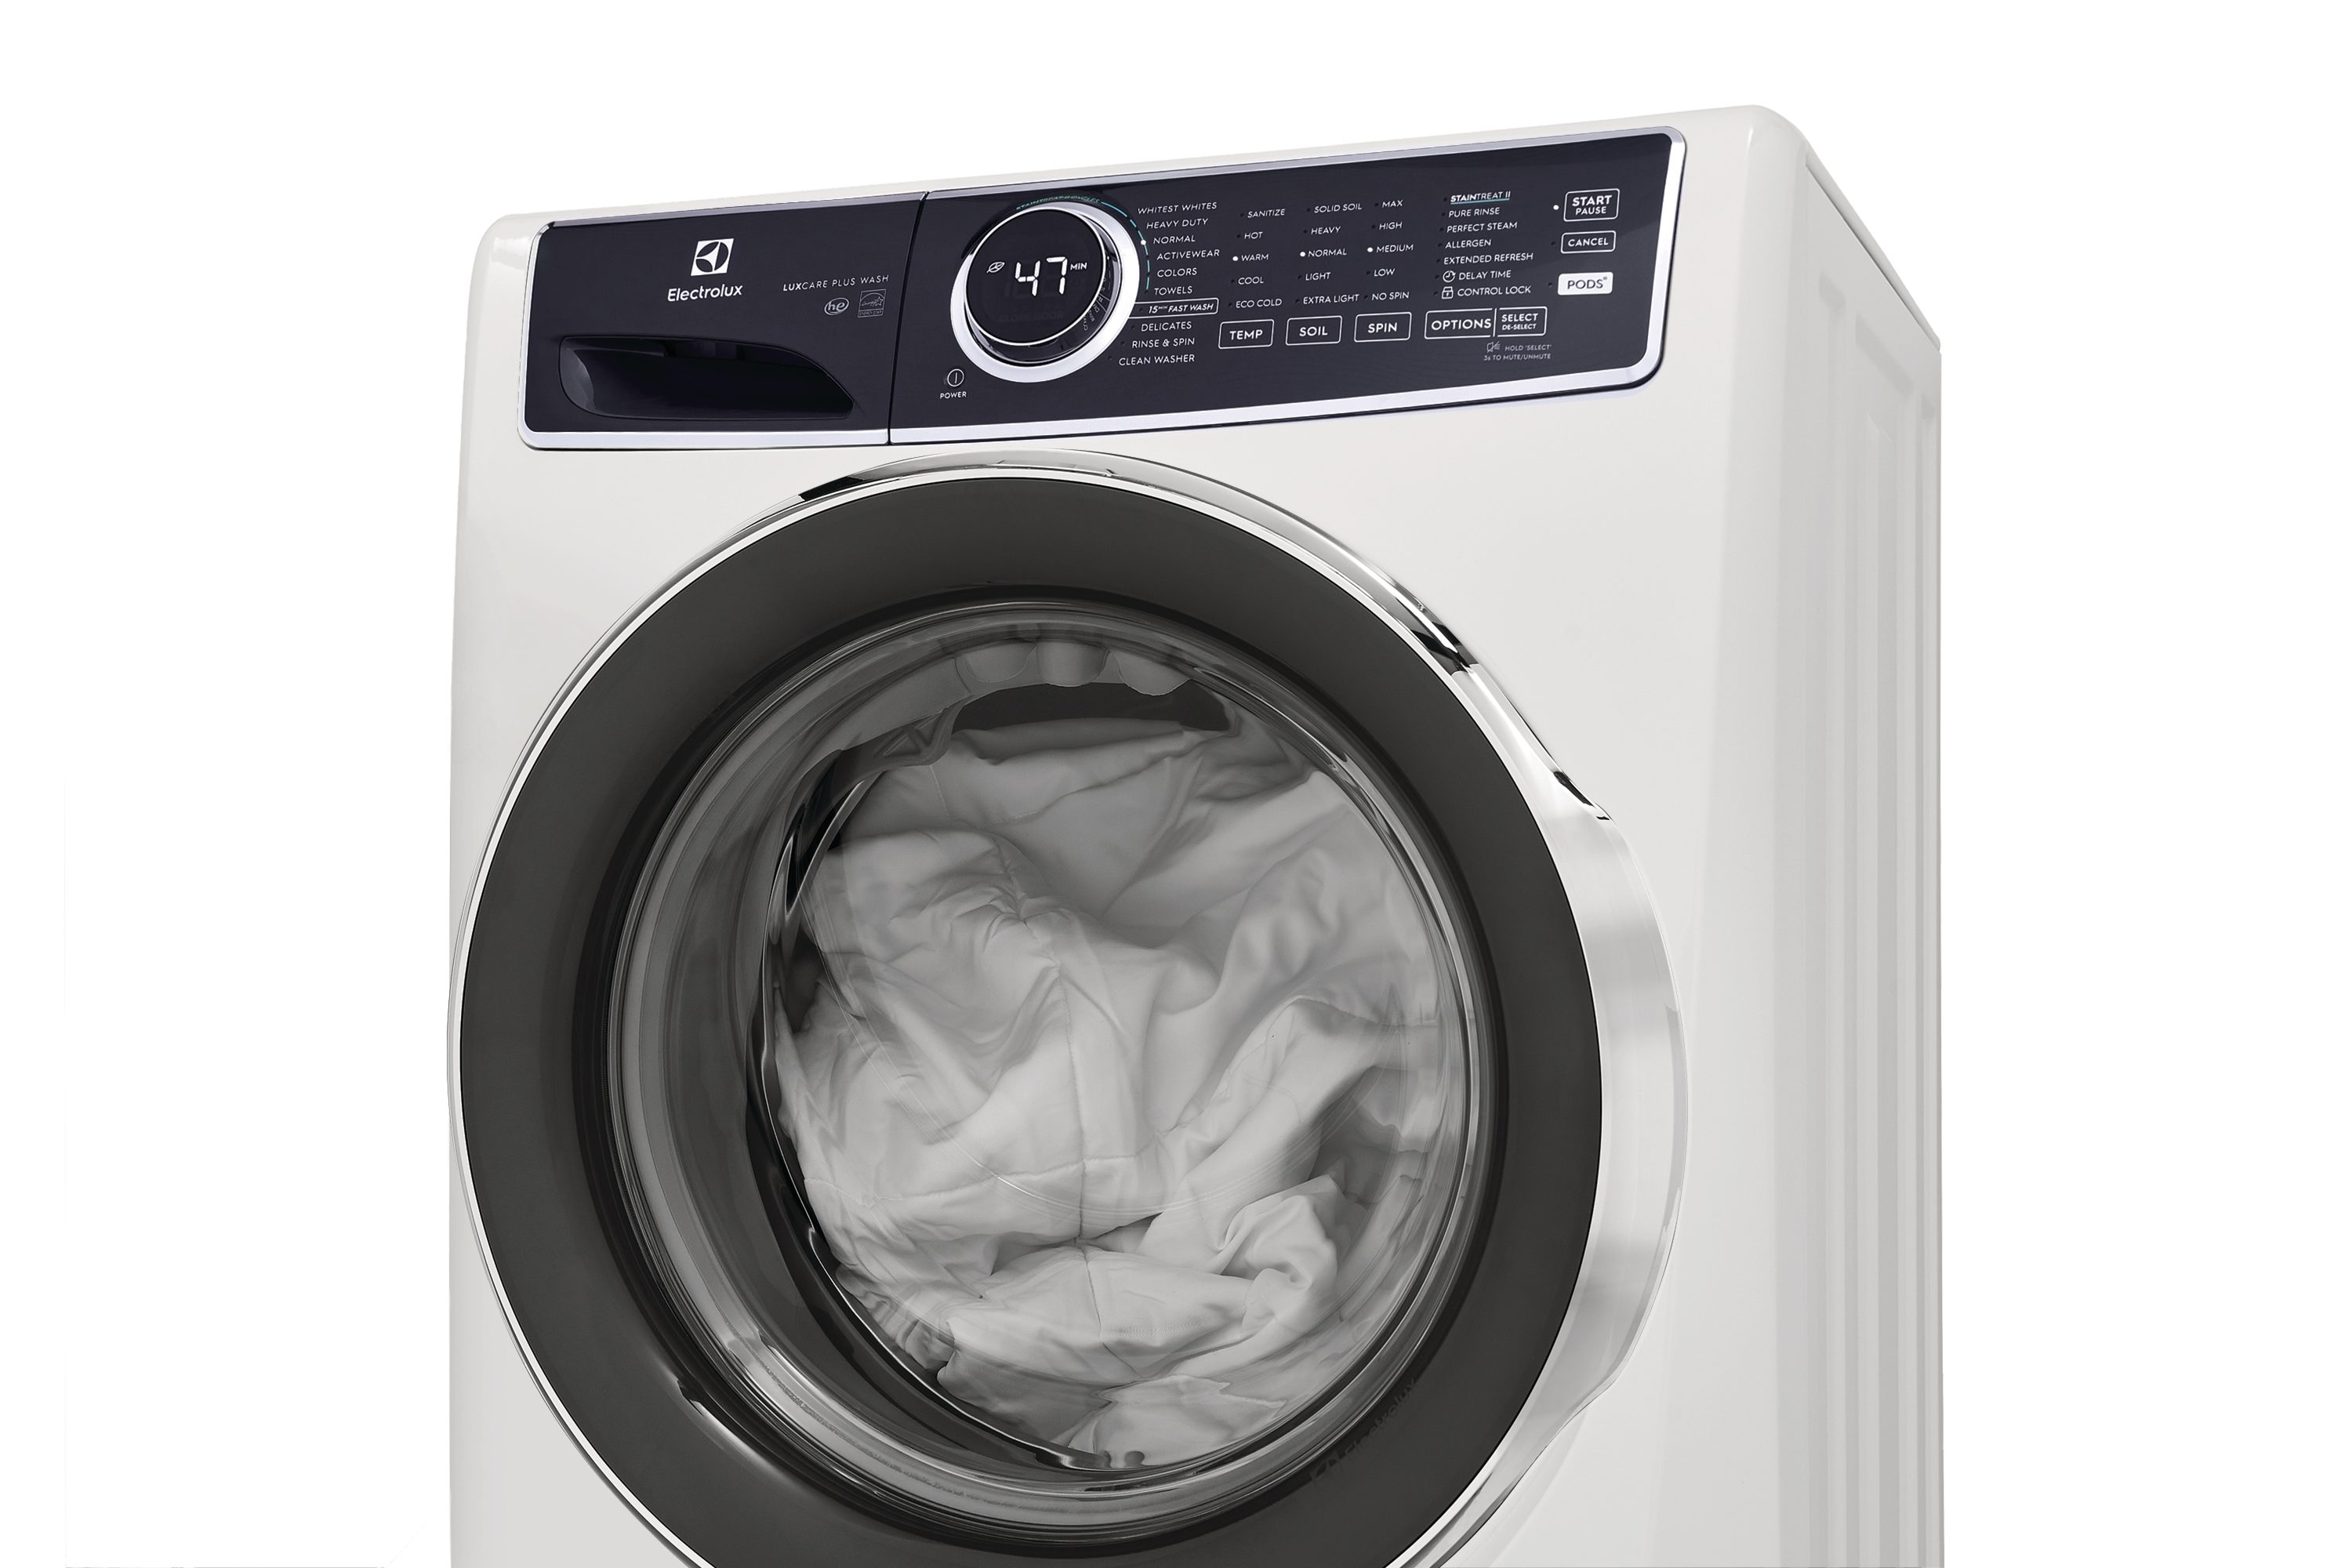 ik ben slaperig Trillen Omgekeerd Electrolux Washing Machines at Lowes.com